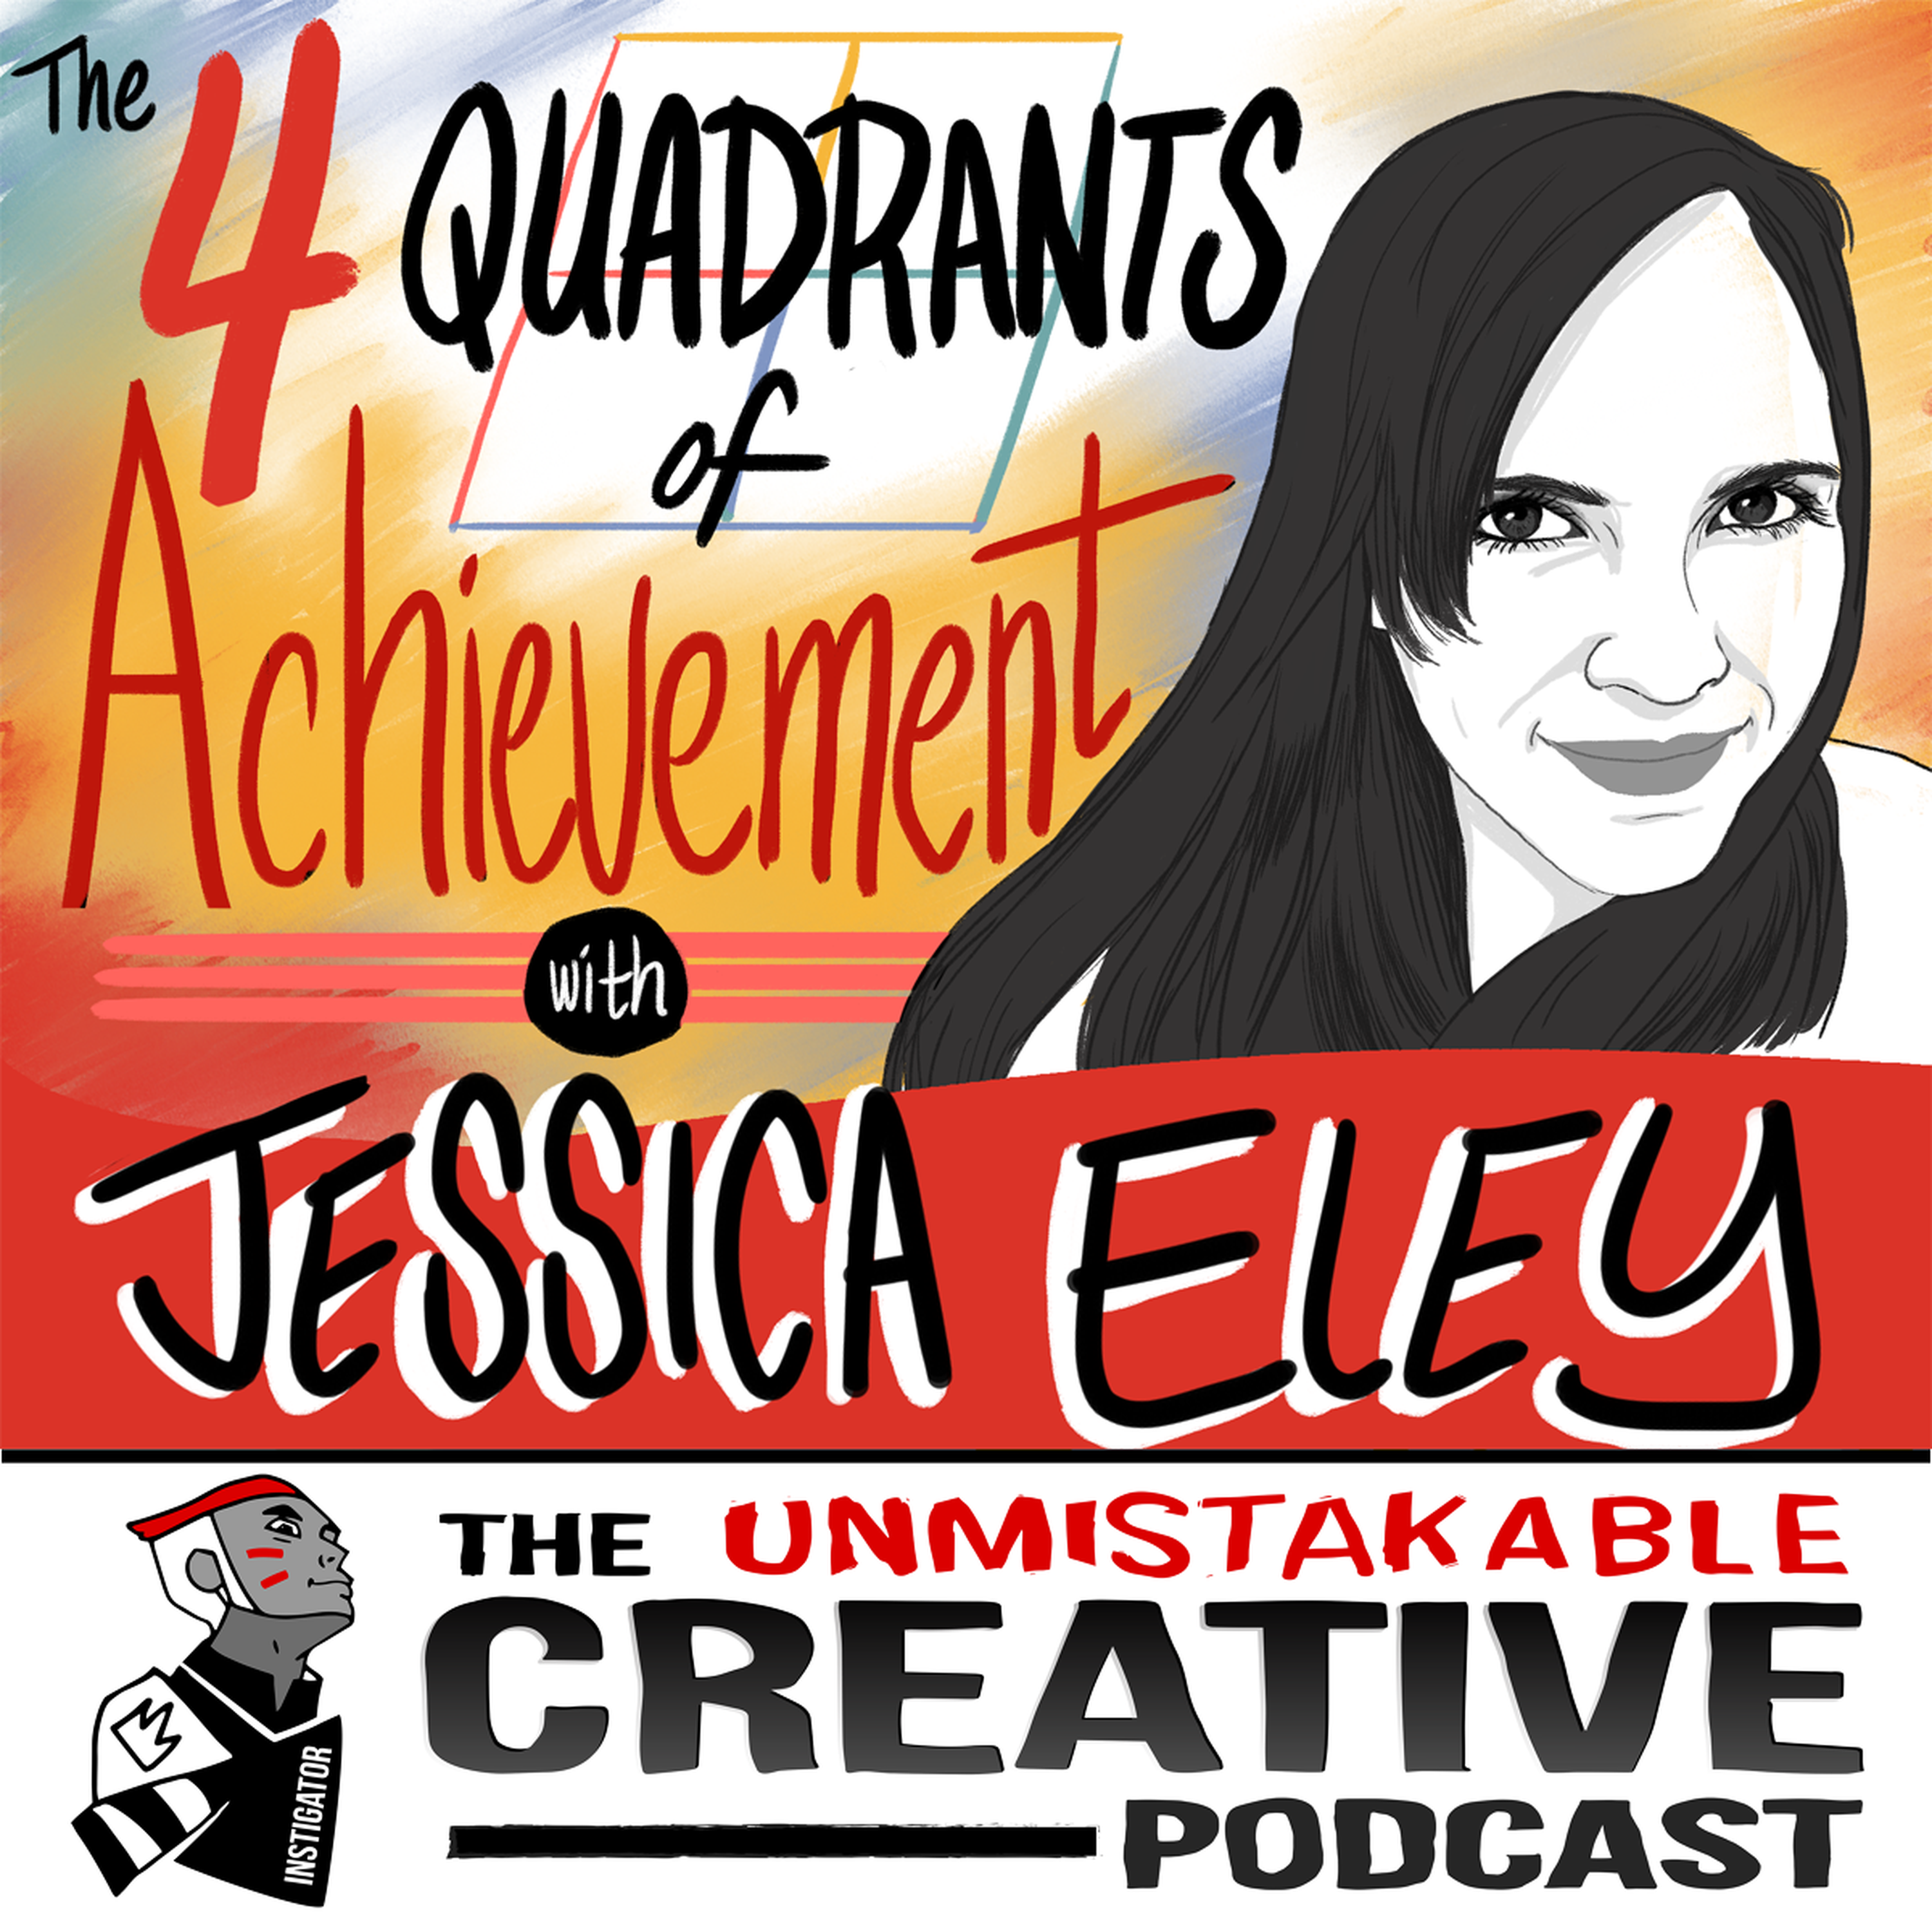 Jessica Eley: The Four Quadrants of Achievement